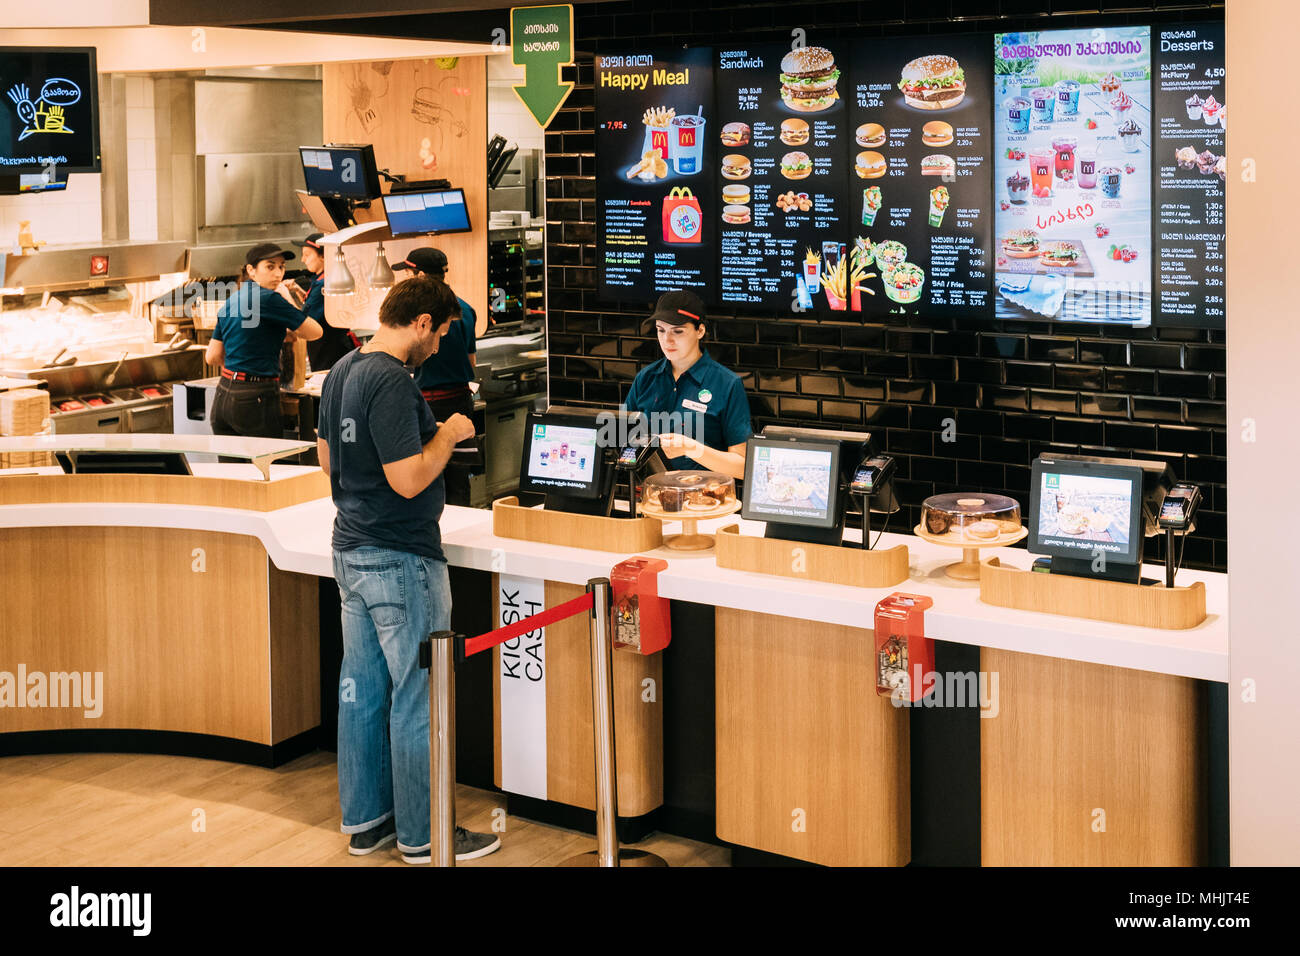 Kutaisi, Georgia - September 10, 2017: Interior Of Mcdonalds Restaurant. Mcdonald's Corporation Is World's Largest Chain Of Hamburger Fast Food Restau Stock Photo